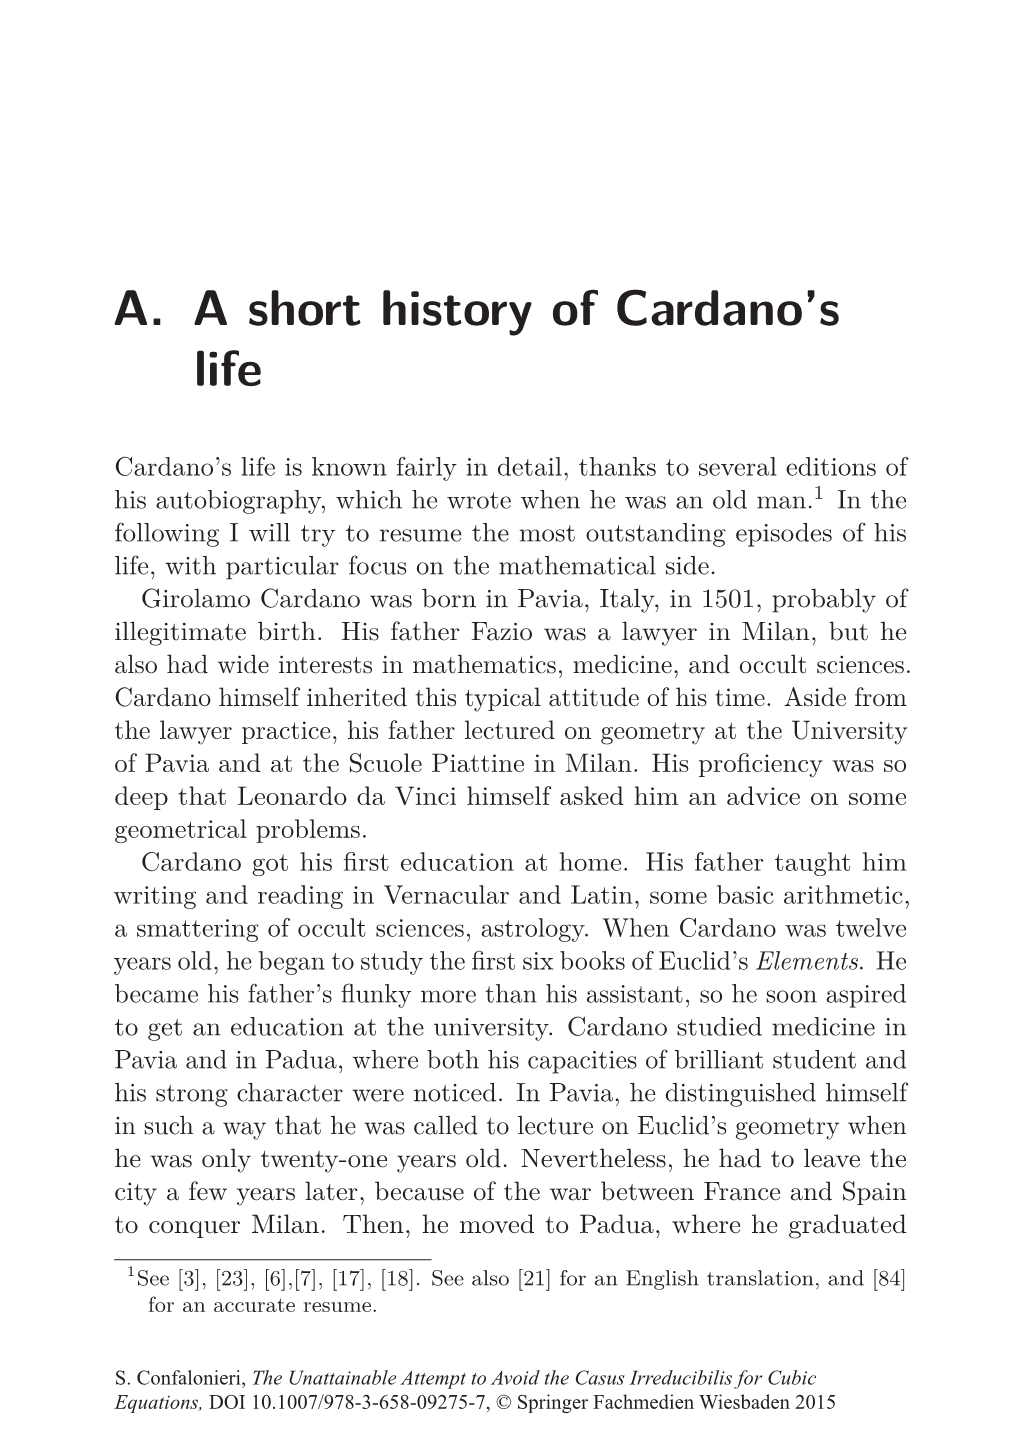 A. a Short History of Cardano's Life